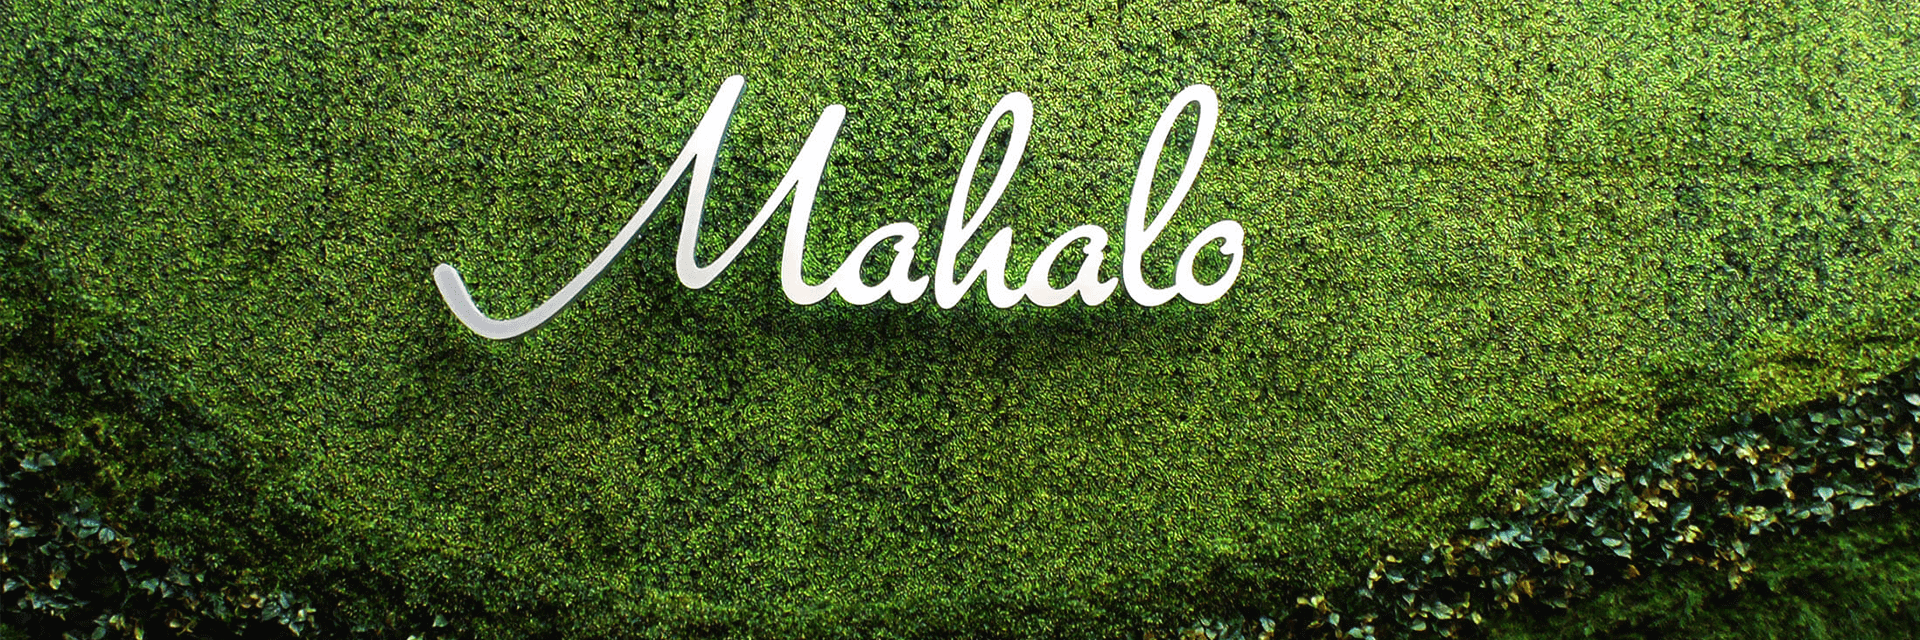 Mahalo green wall at the California Hotel & Casino